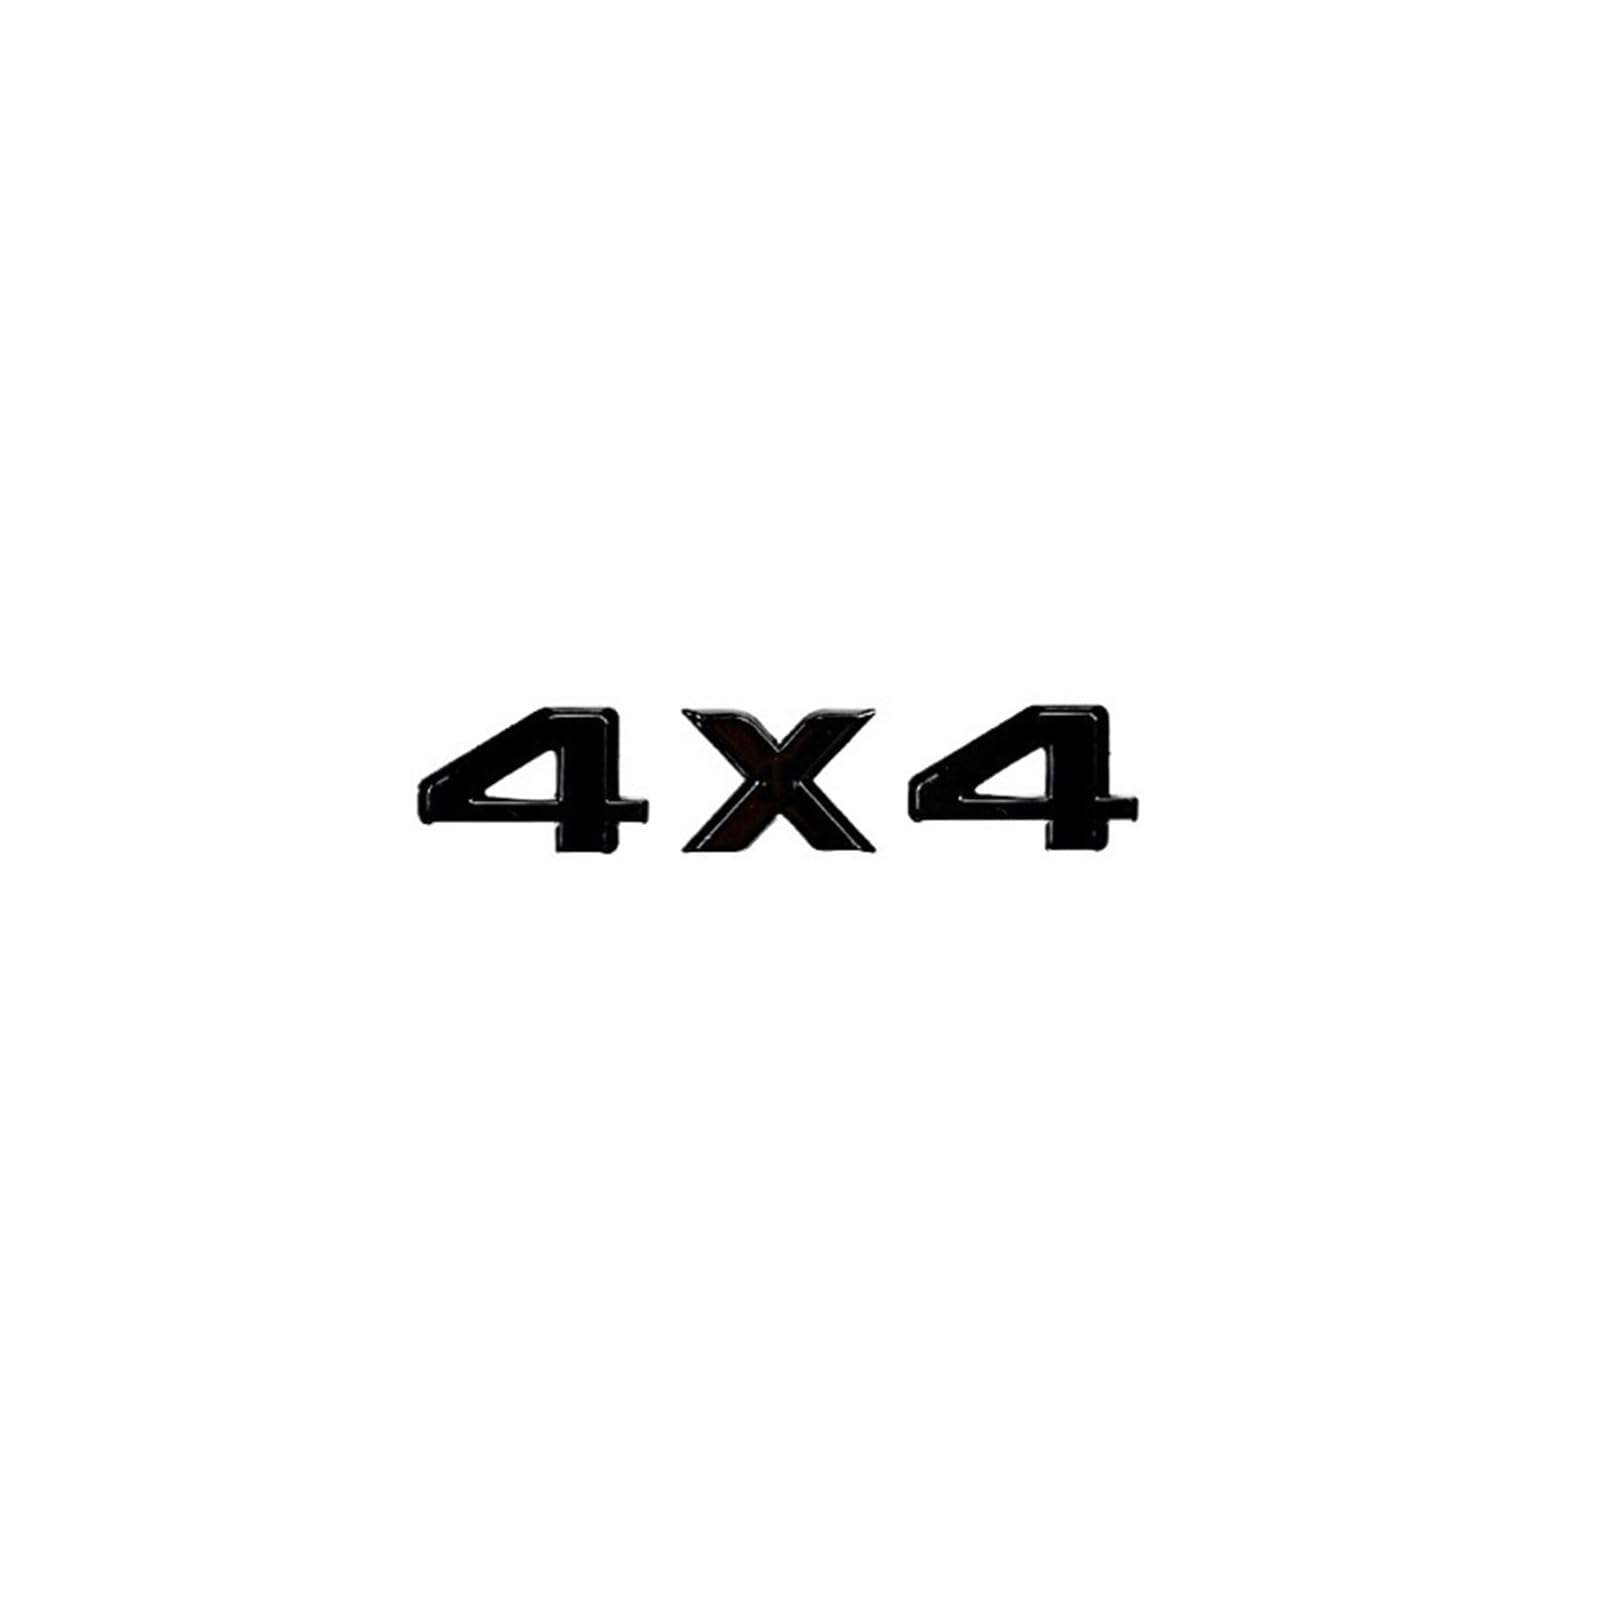 AQXYWQOL Kofferraumbuchstaben Logo Alphabet Abzeichen Emblem Aufkleber Aufkleber kompatibel mit G-Klasse G55 G63 G65 G350d G500 4X4 W461 W463 W464 Farbe ist konstant, verblasst nicht und beschädigt(F) von AQXYWQOL